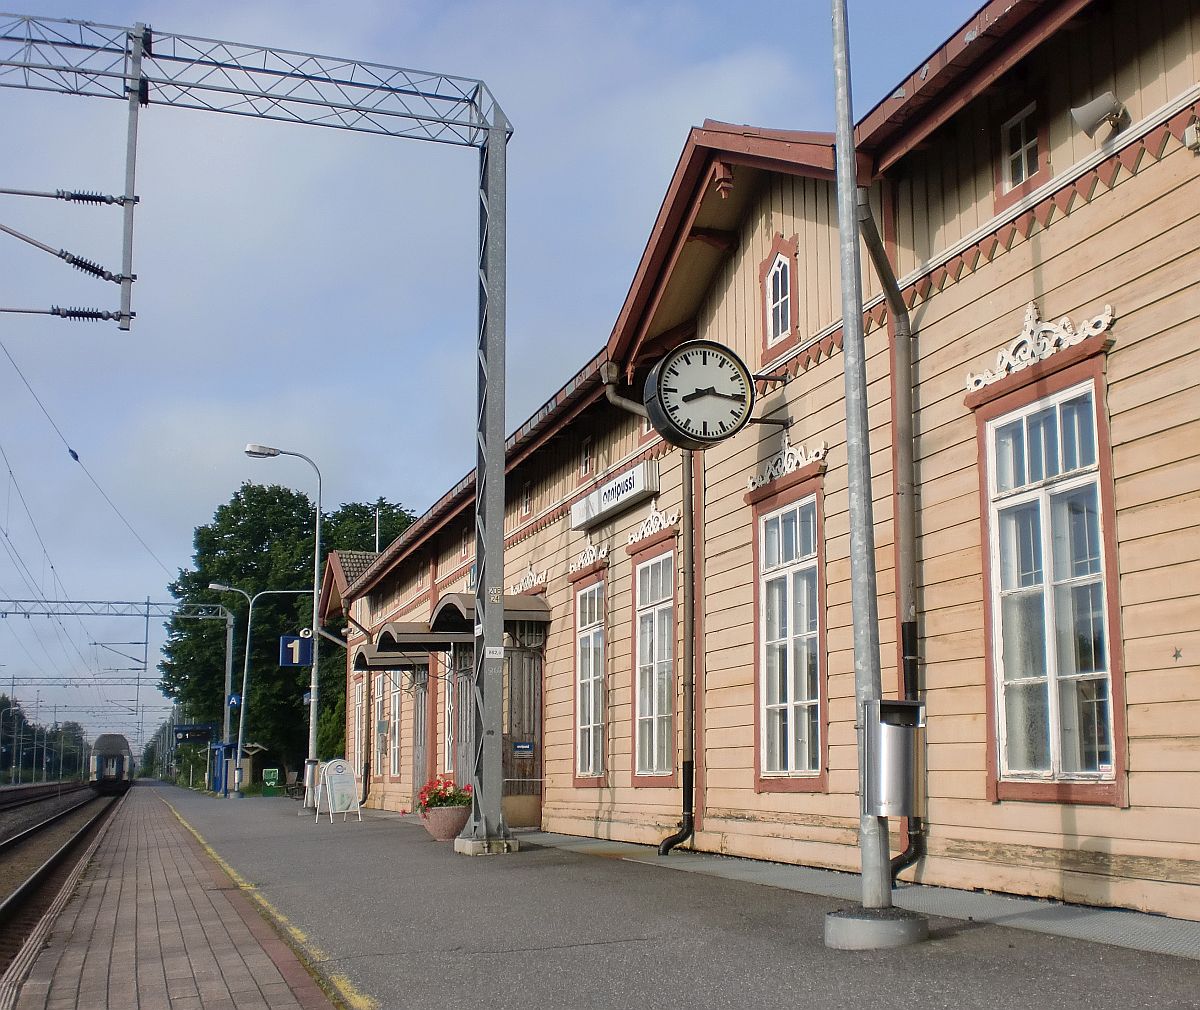 Loimaan rautatieasema. Wiki Loves Monuments, CC BY-SA 4.0 Mikkoau 2015